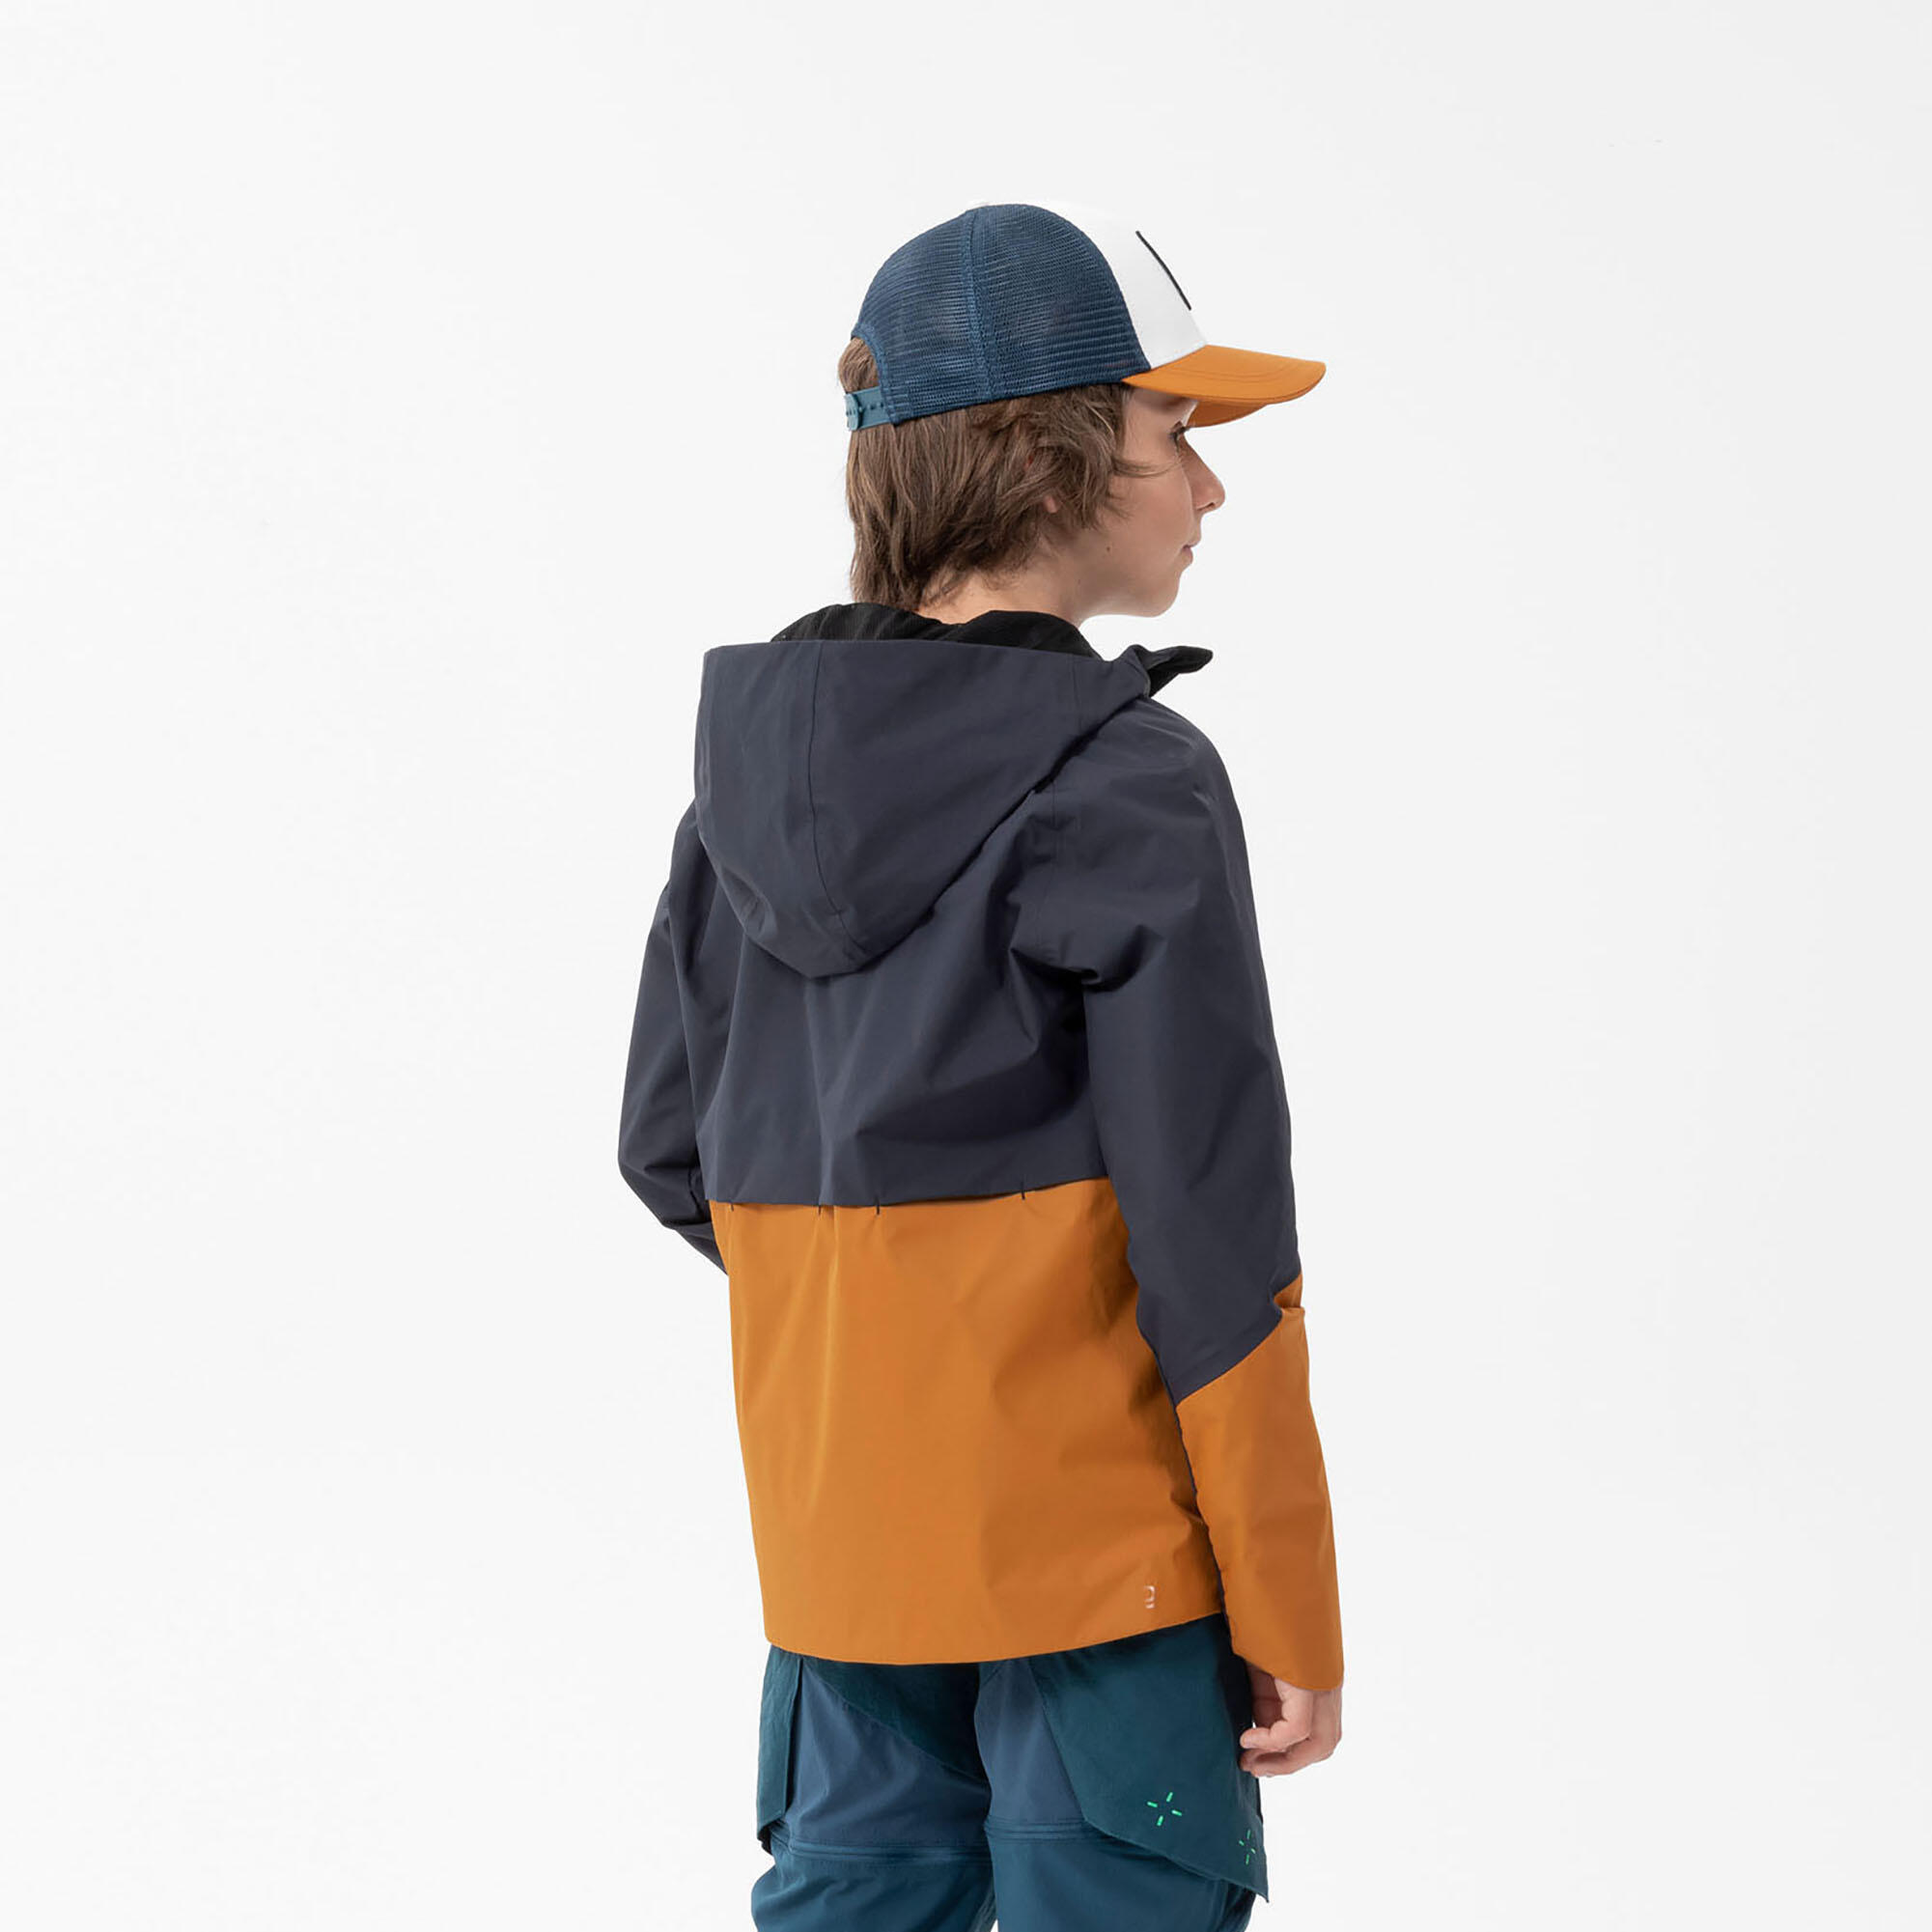 Kids’ Waterproof Jacket - MH 500 Grey - Carbon grey, Ochre - Quechua ...